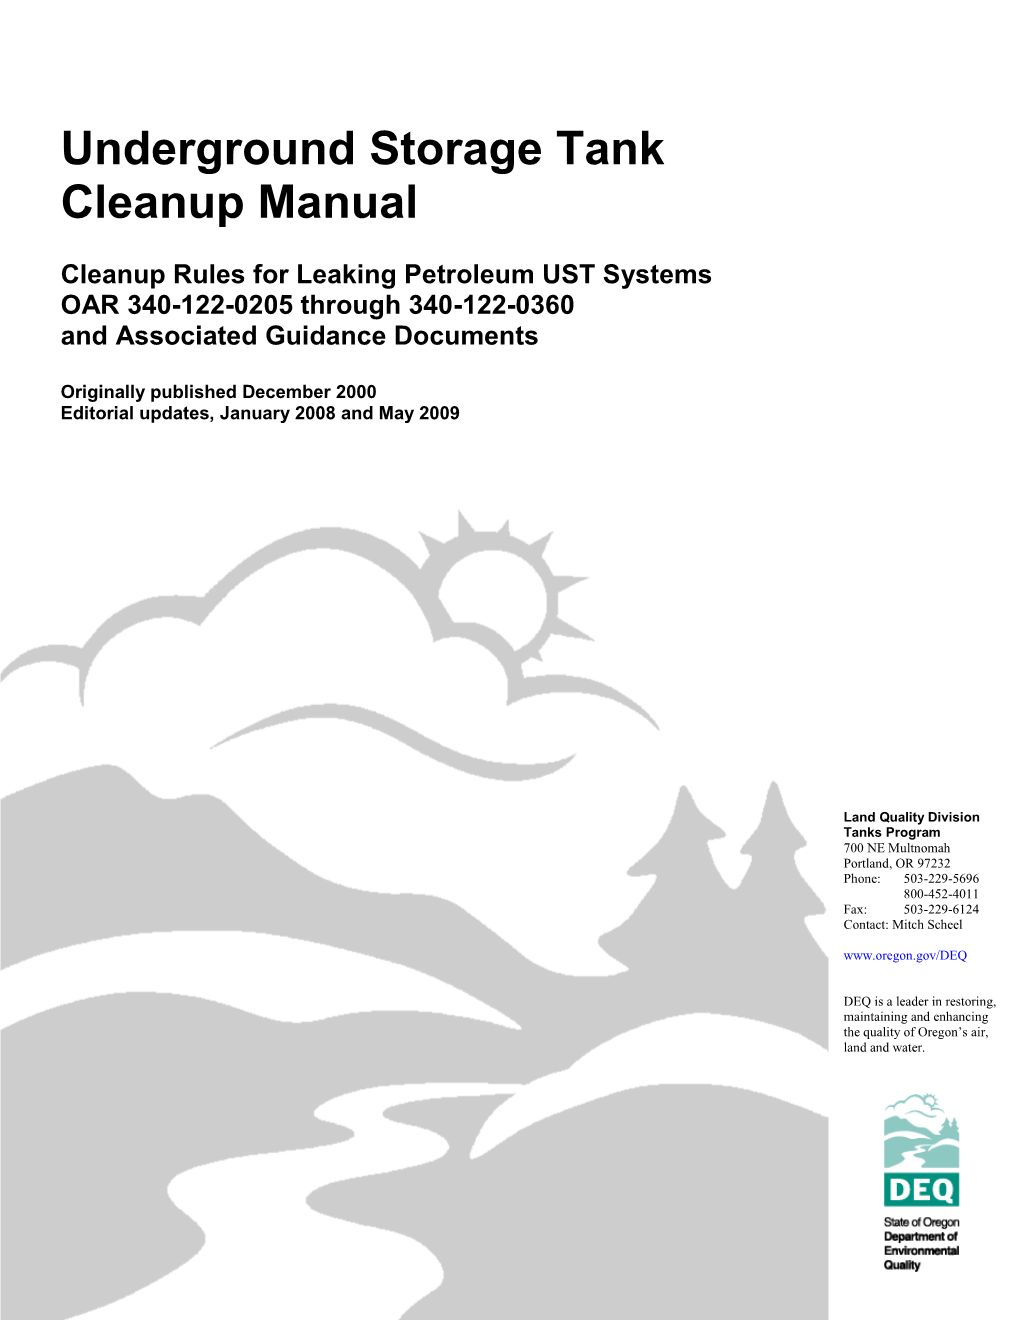 DEQ UST Cleanup Manual